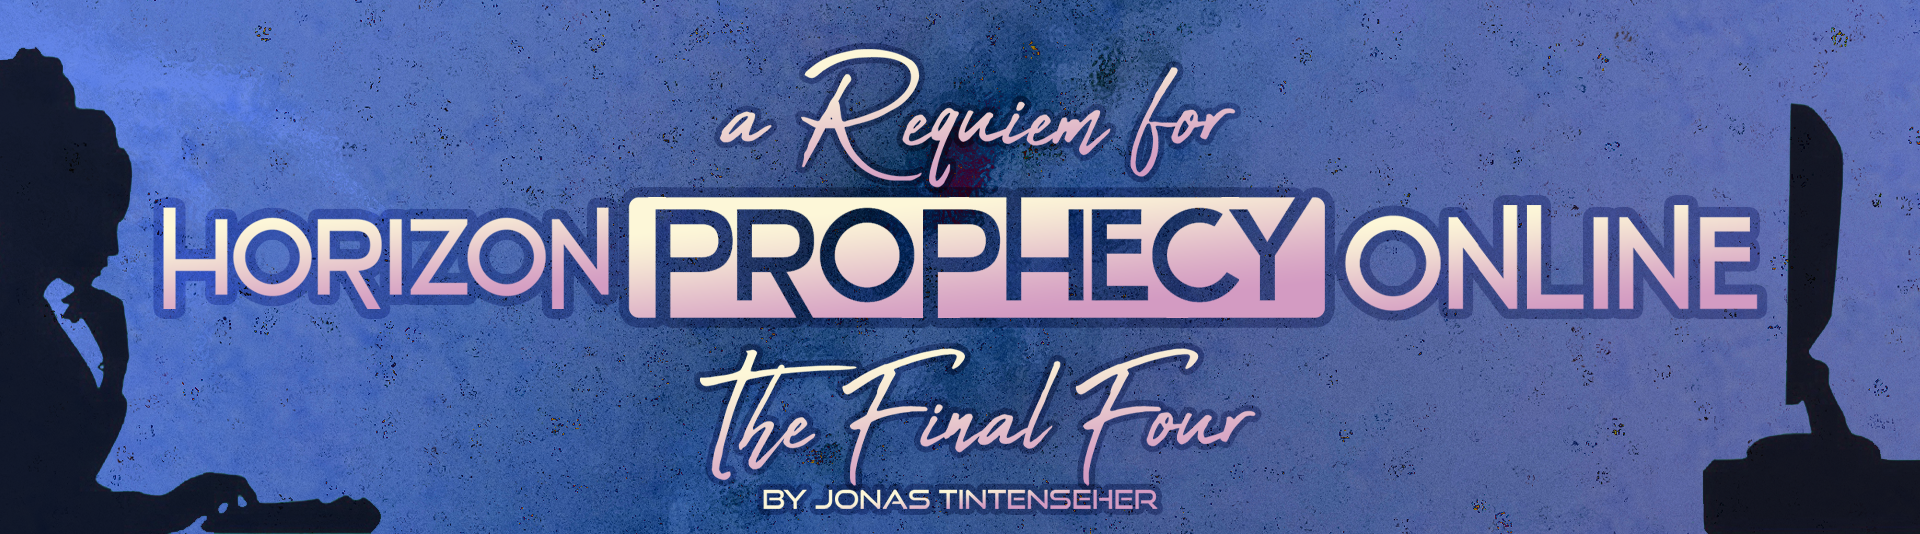 A Requiem For Horizon Prophecy Online: The Final Four